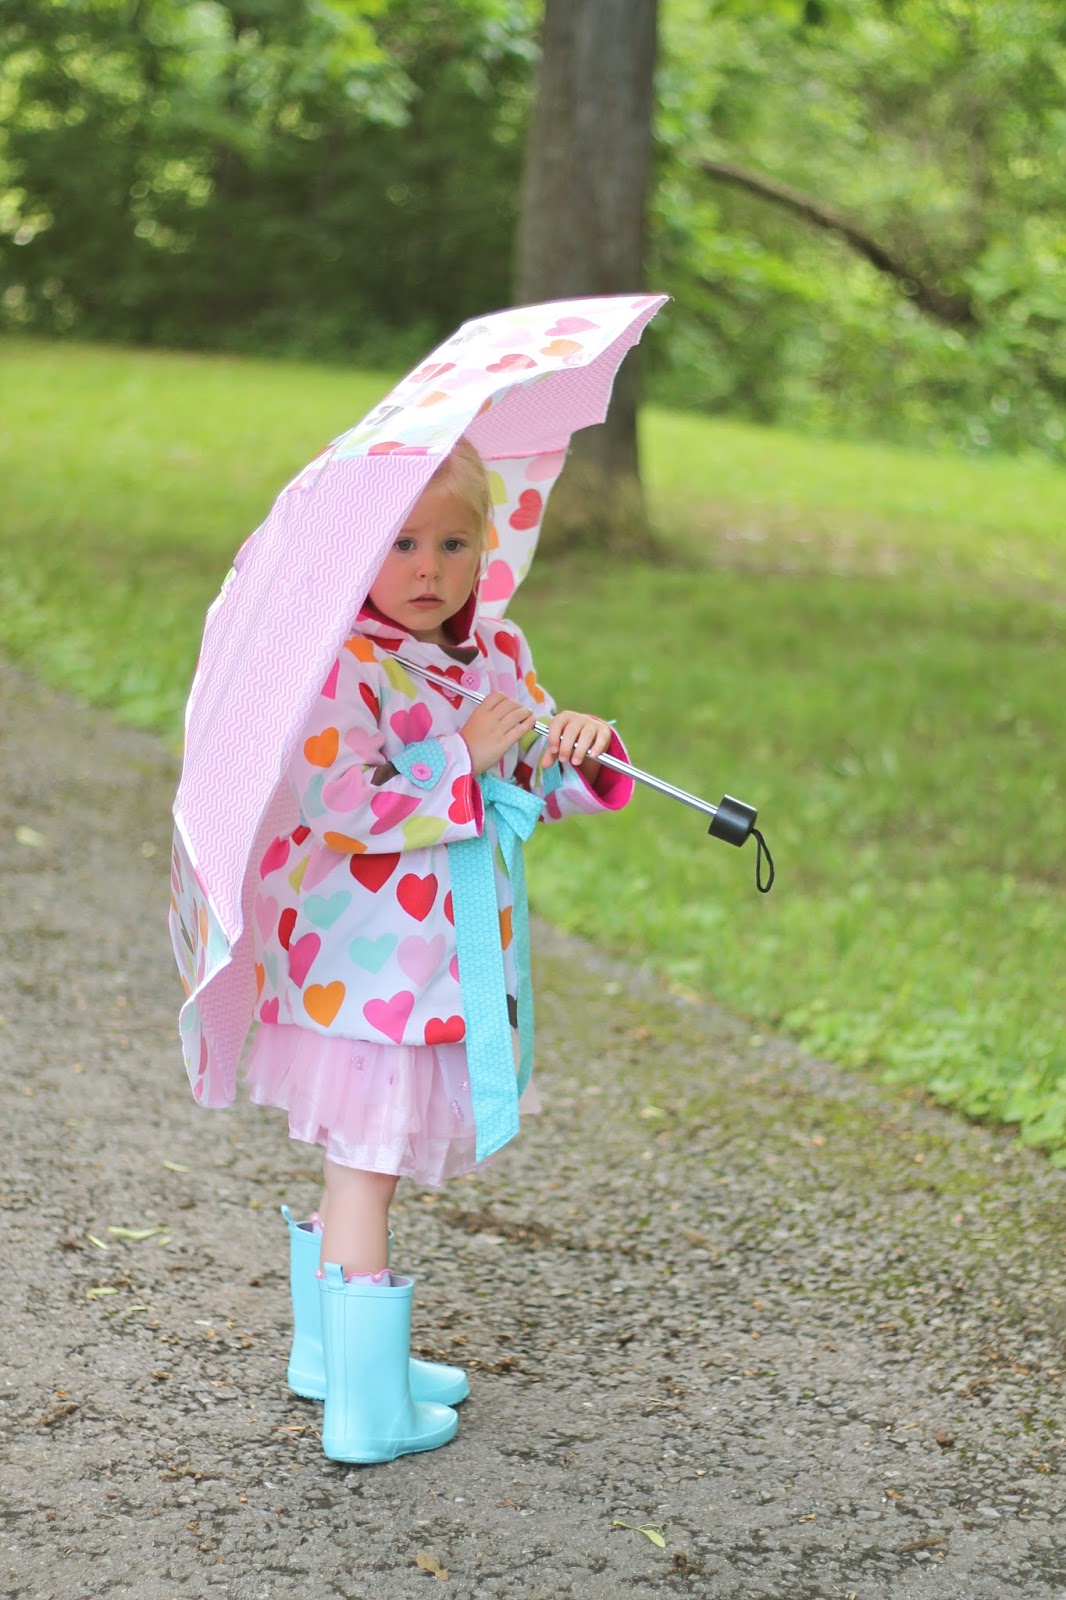 The Rainy Day Redo: Raincoat and Umbrella Upcycle ...